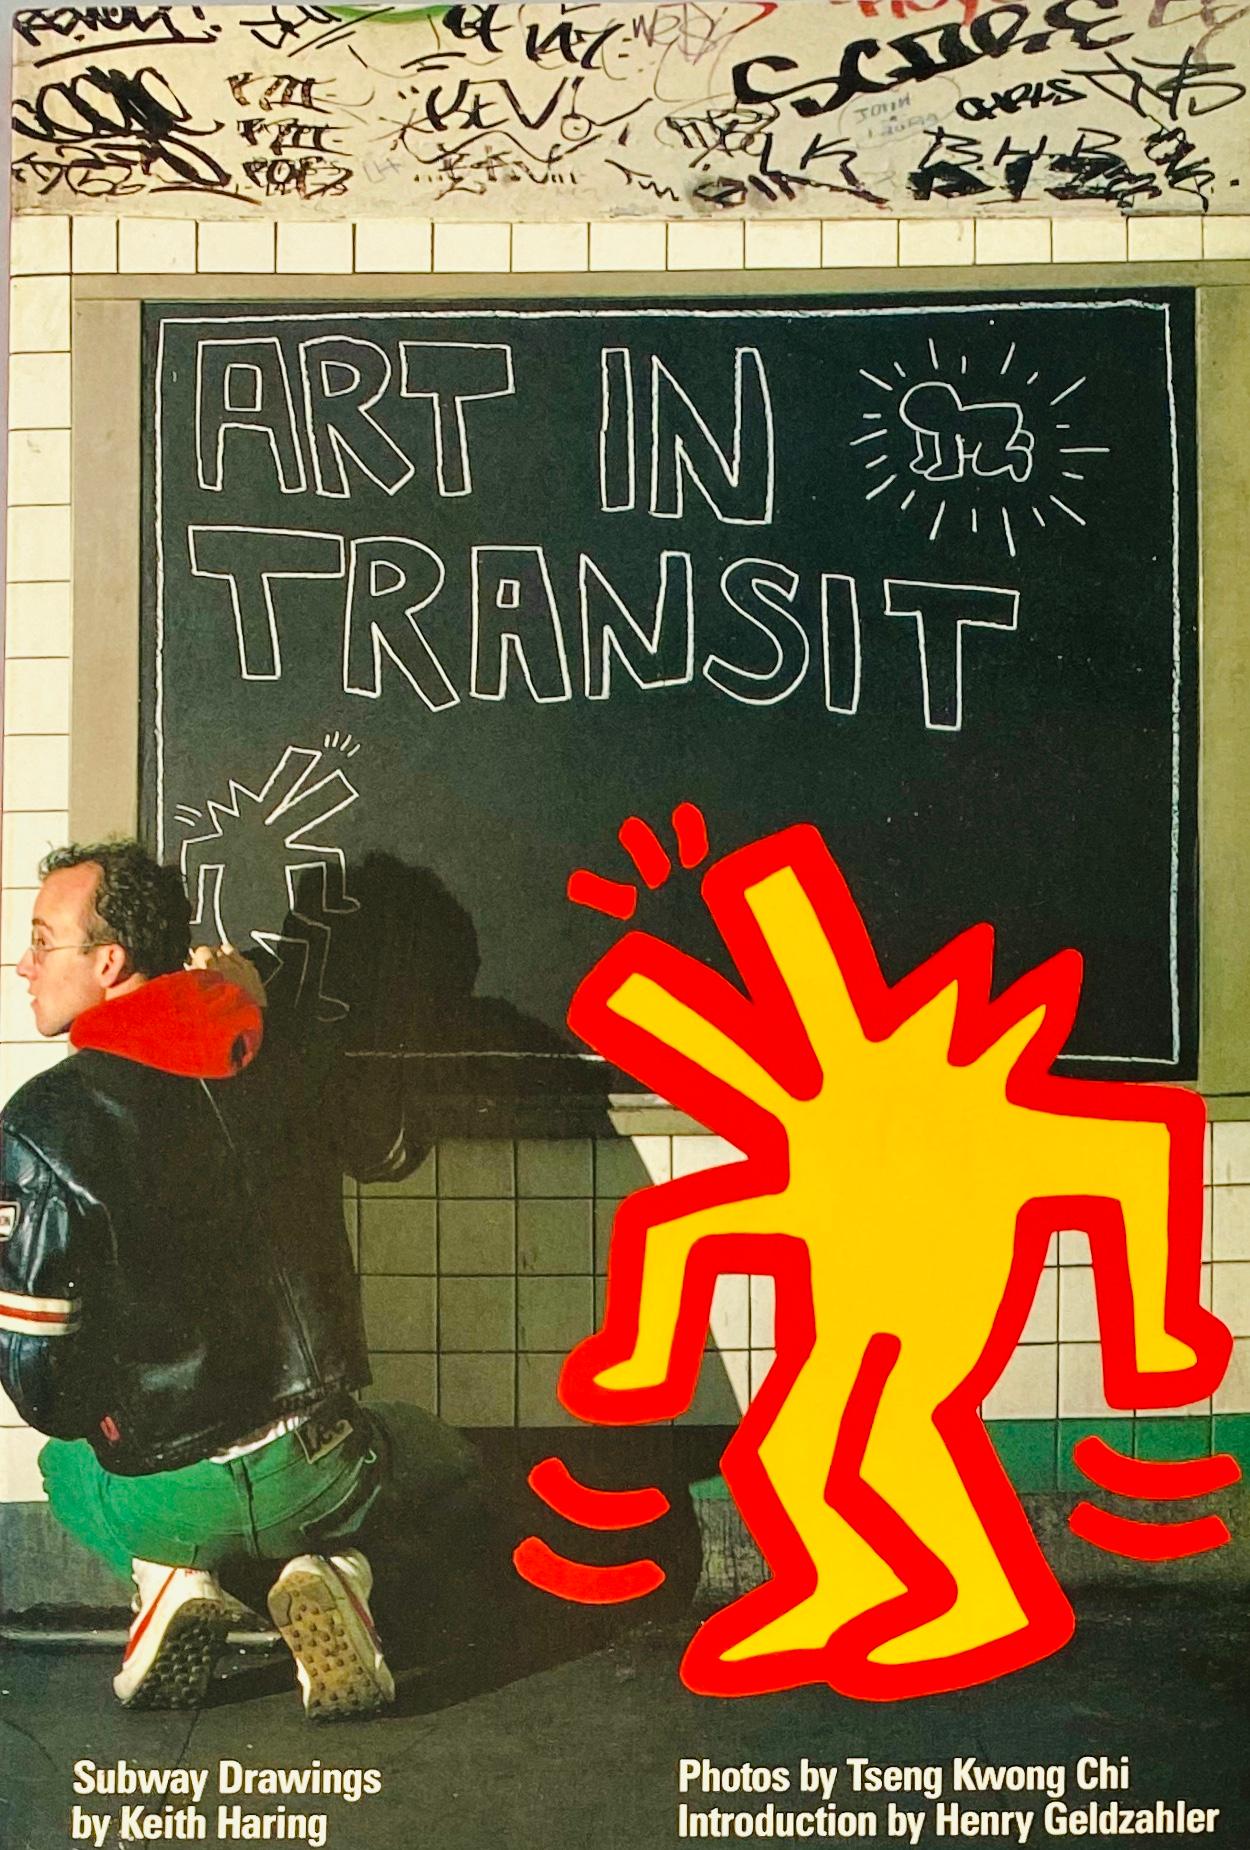 Keith Haring Art in Transit 1984 (Keith Haring Tseng Kwong Chi book)  - Photograph by (after) Keith Haring